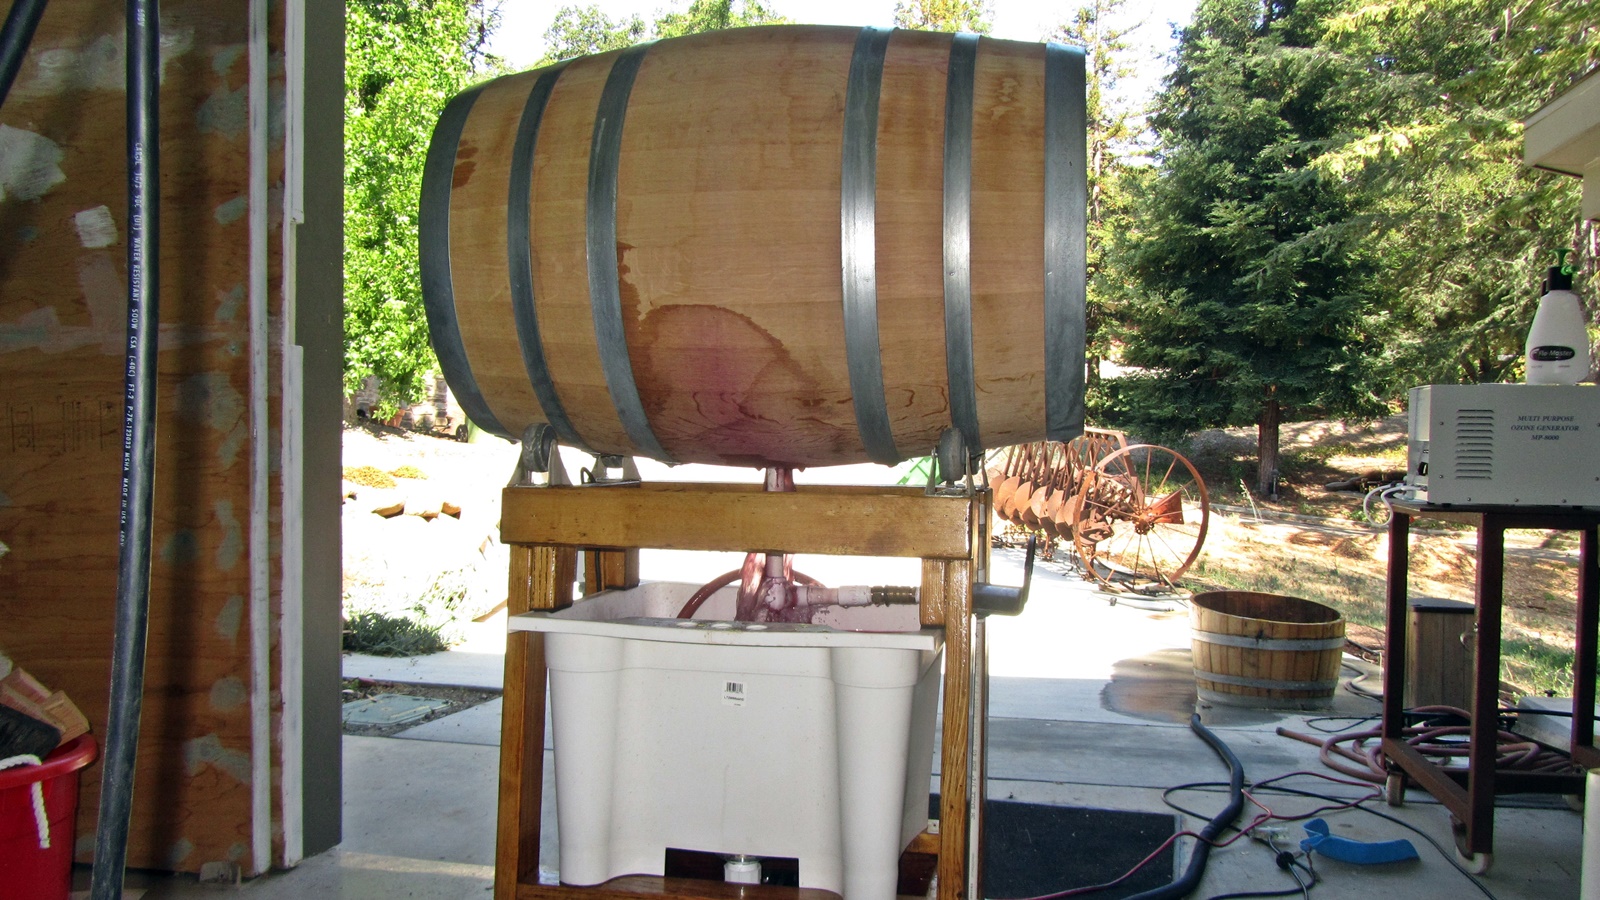 2 Cleaninng barrel on barrel washer